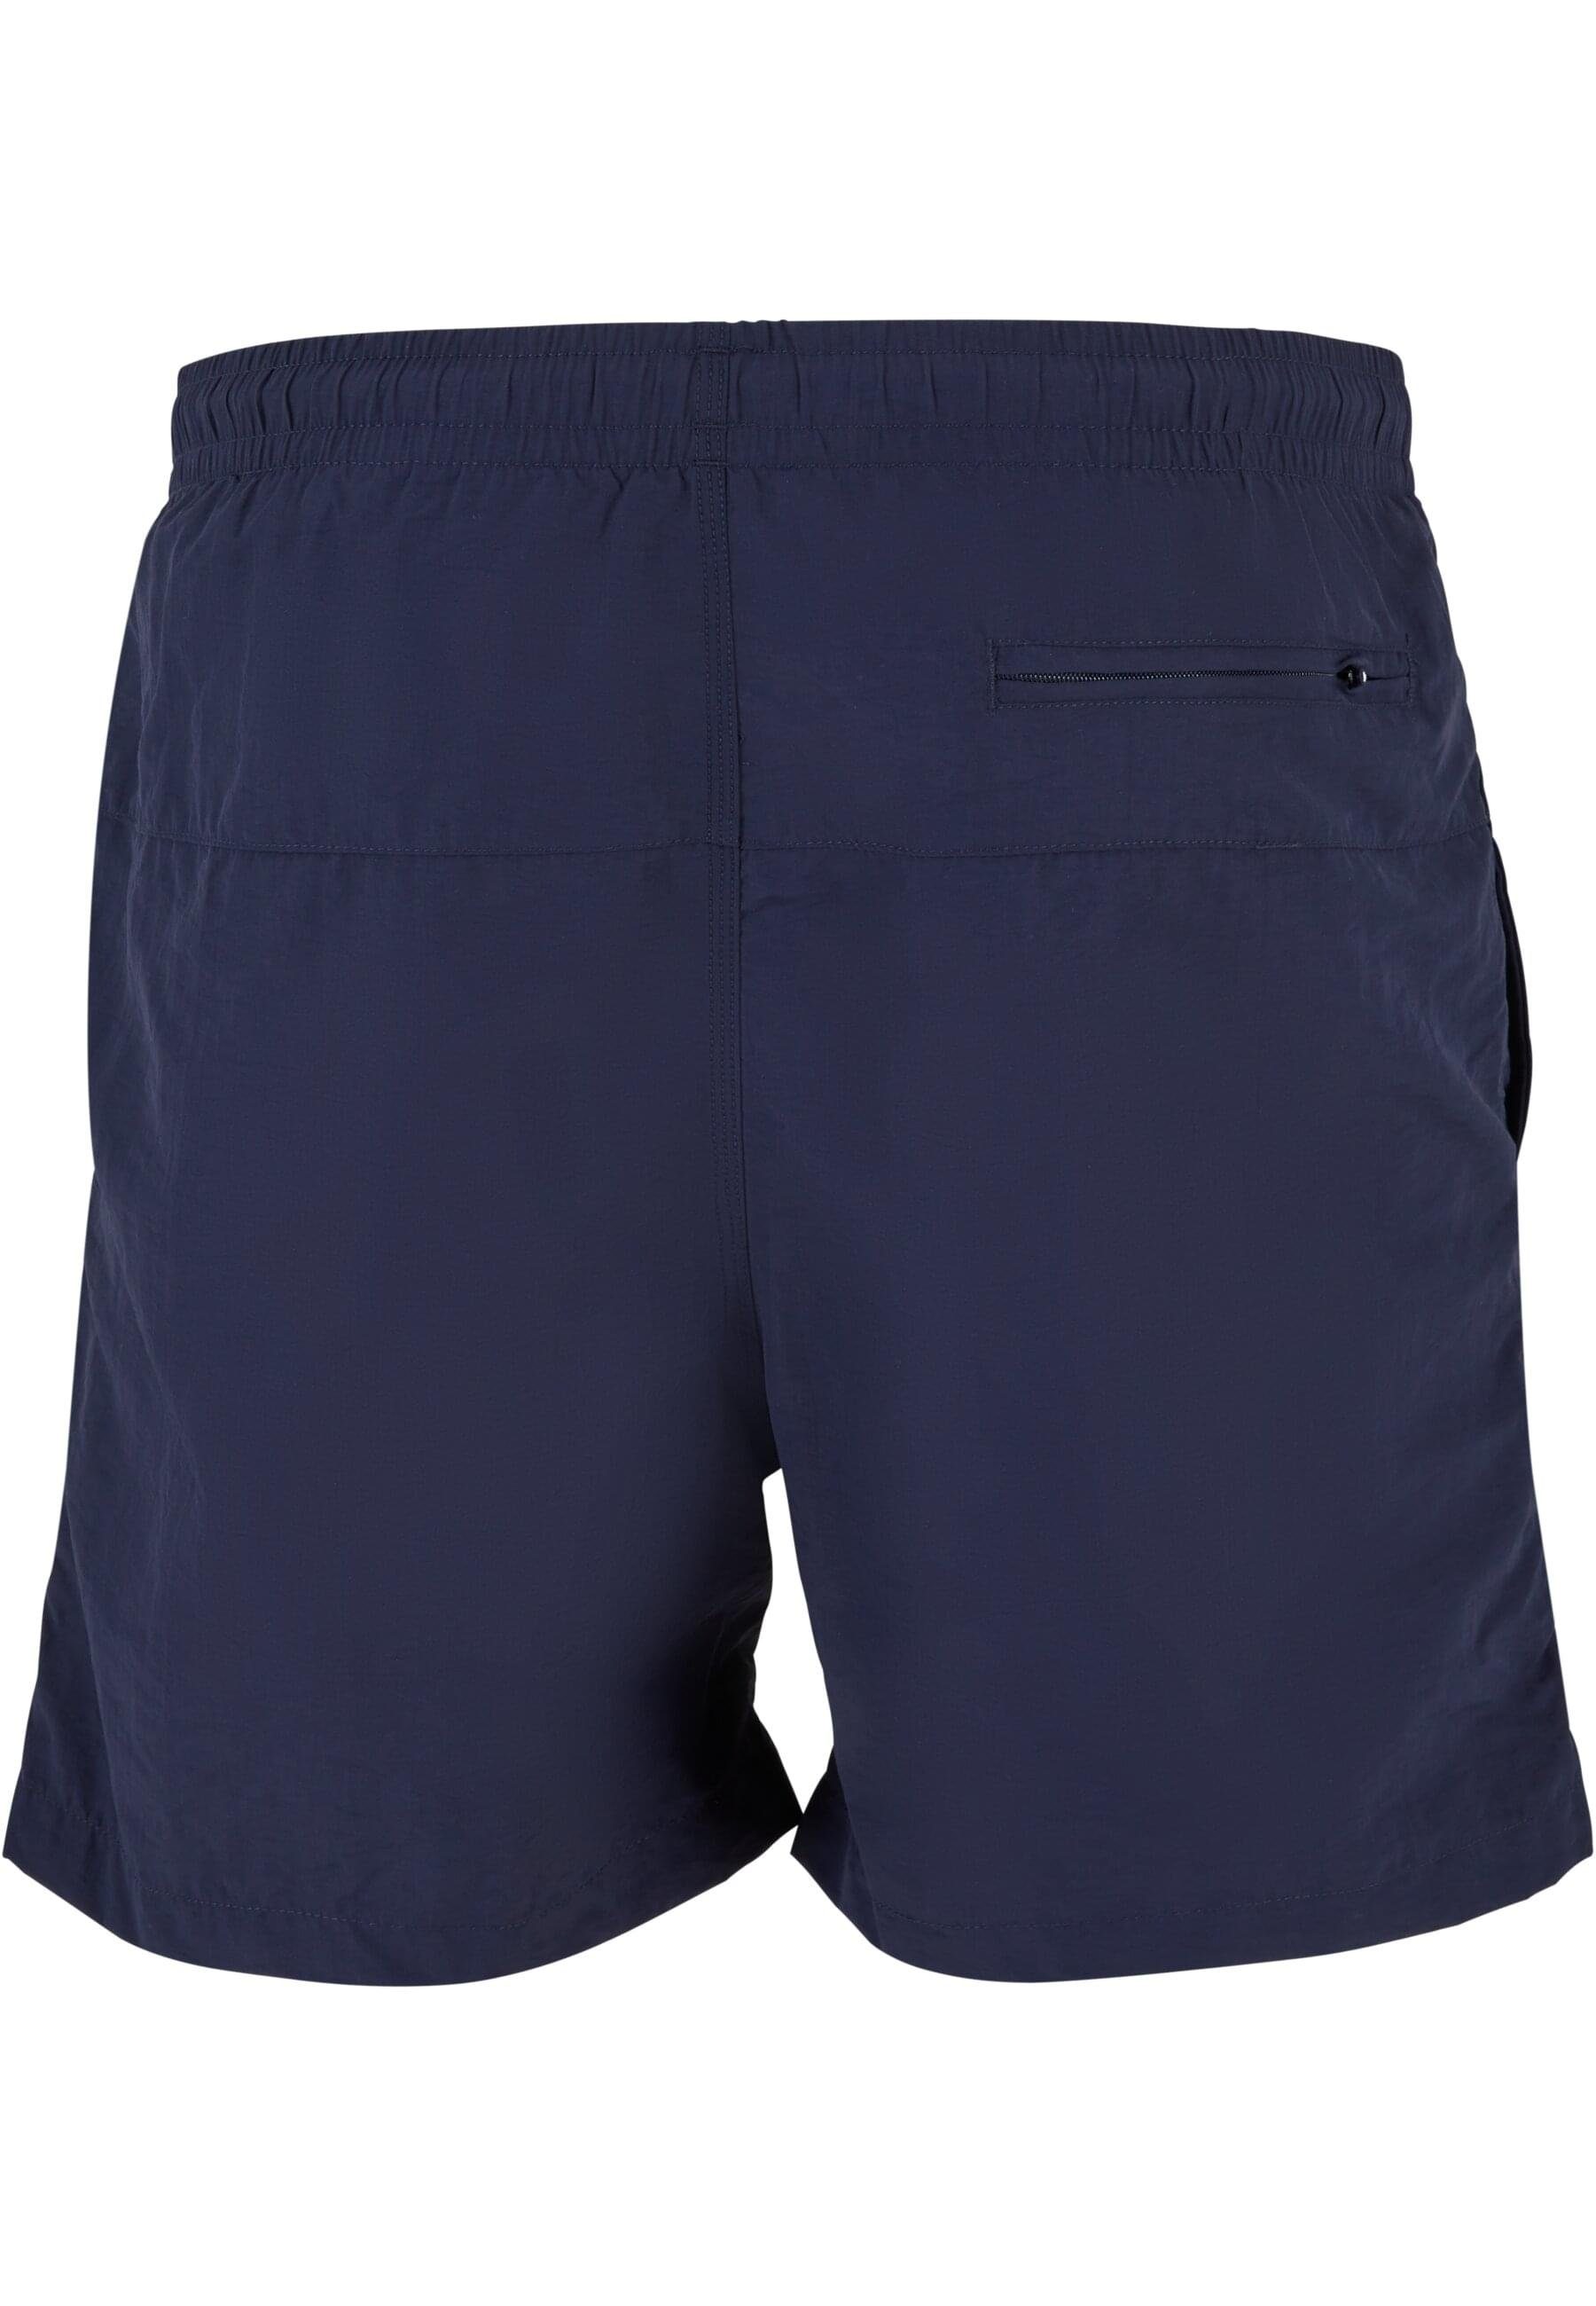 navy/navy Swim Herren Shorts Badeshorts CLASSICS URBAN